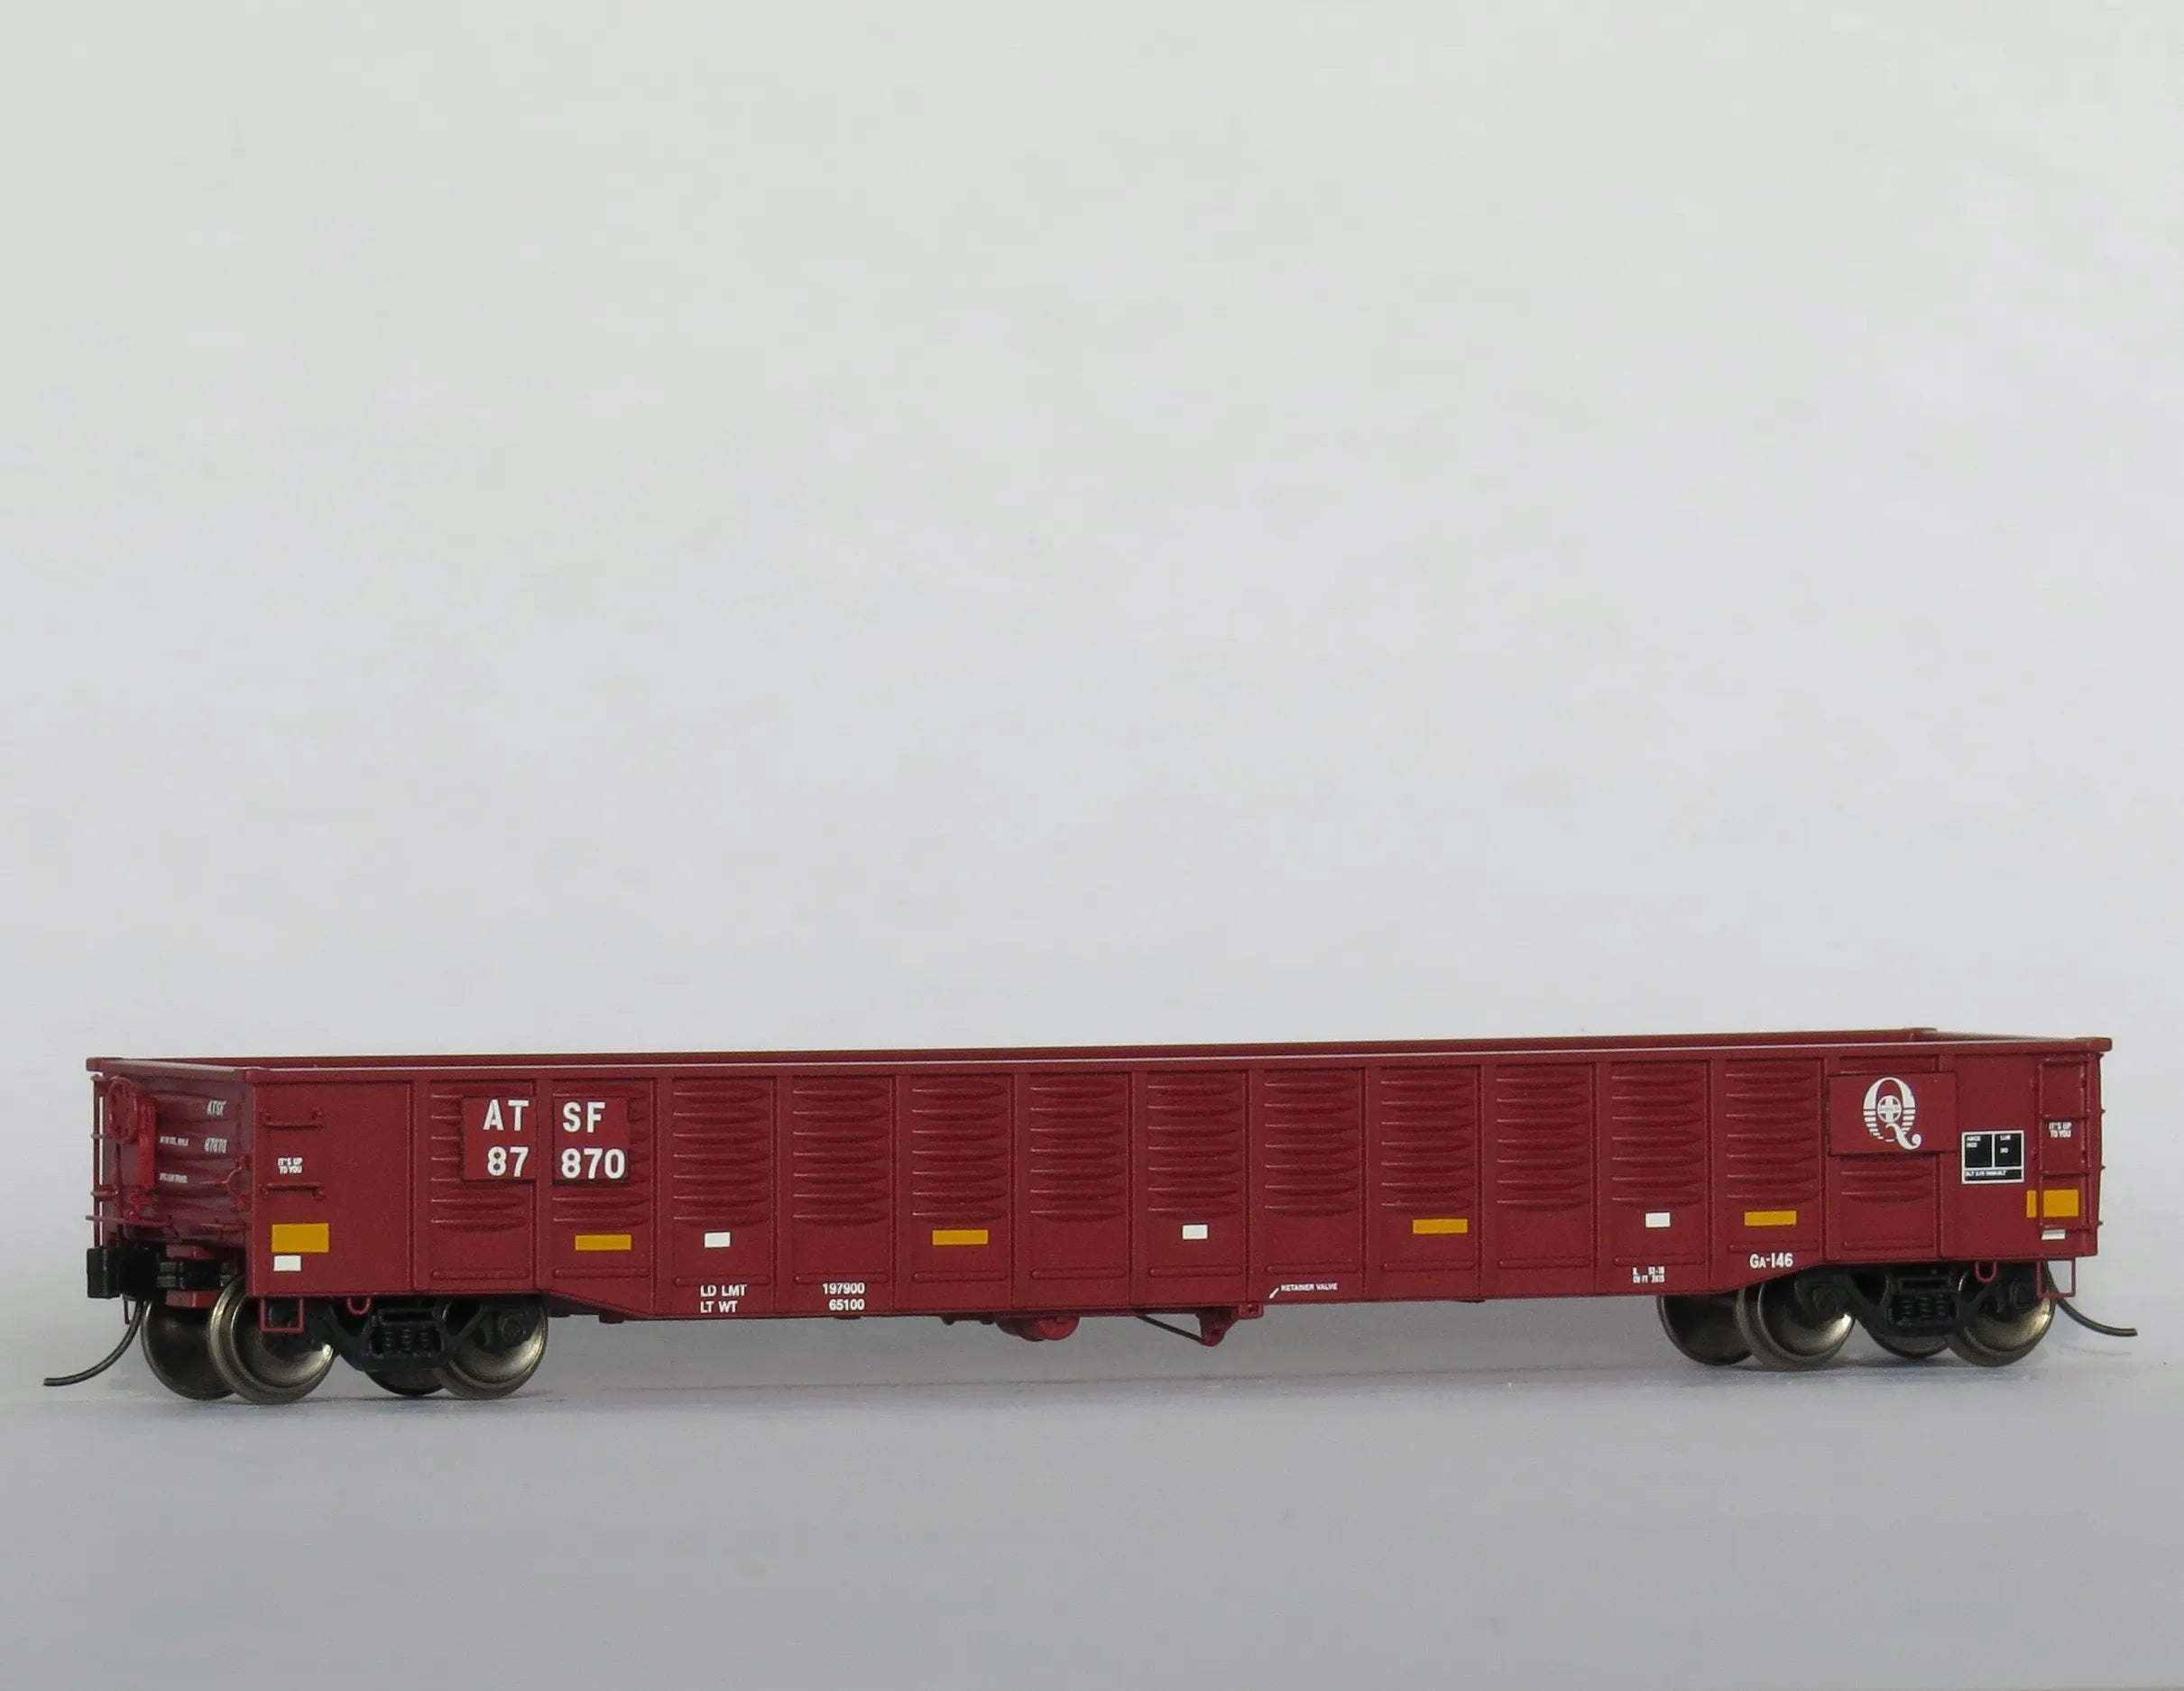 Trainworx 2522518 N Scale, 52' Gondola, Santa Fe #87928